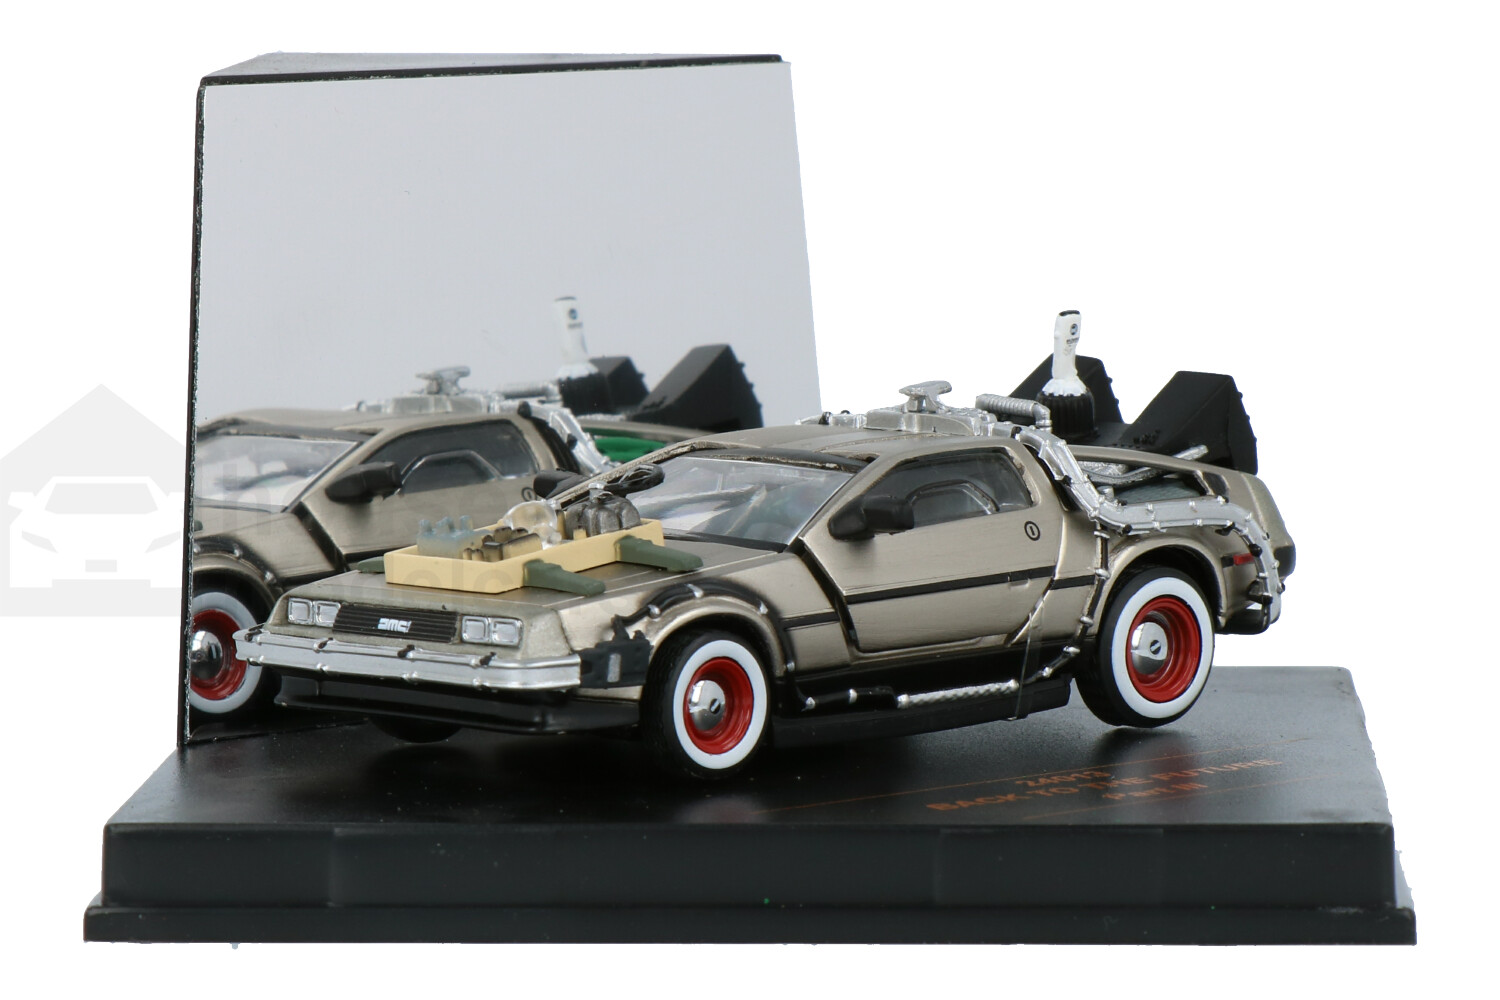 DeLorean DMC 12 - Modelauto schaal 1:43